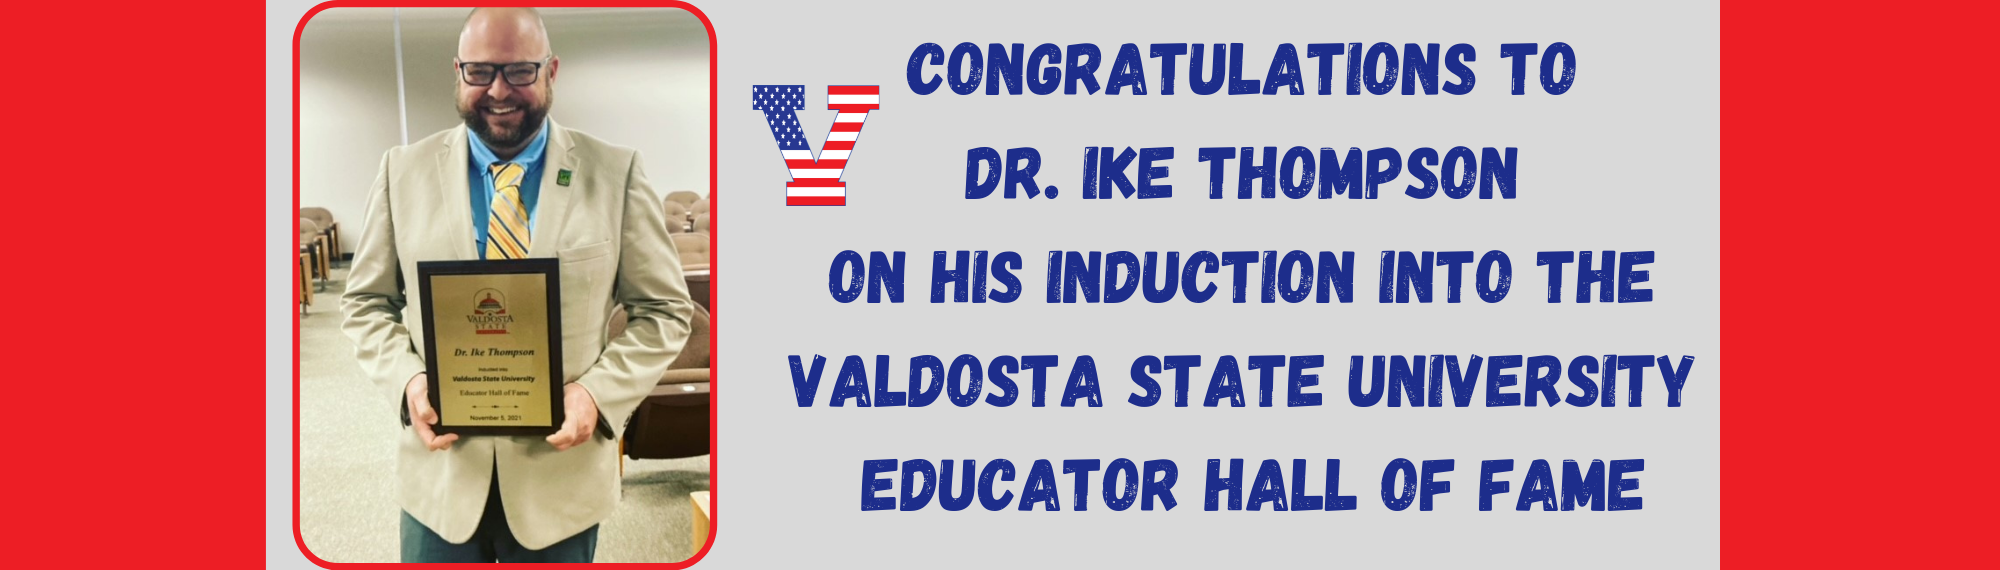 Ike Thompson - Educator Hall of Fame